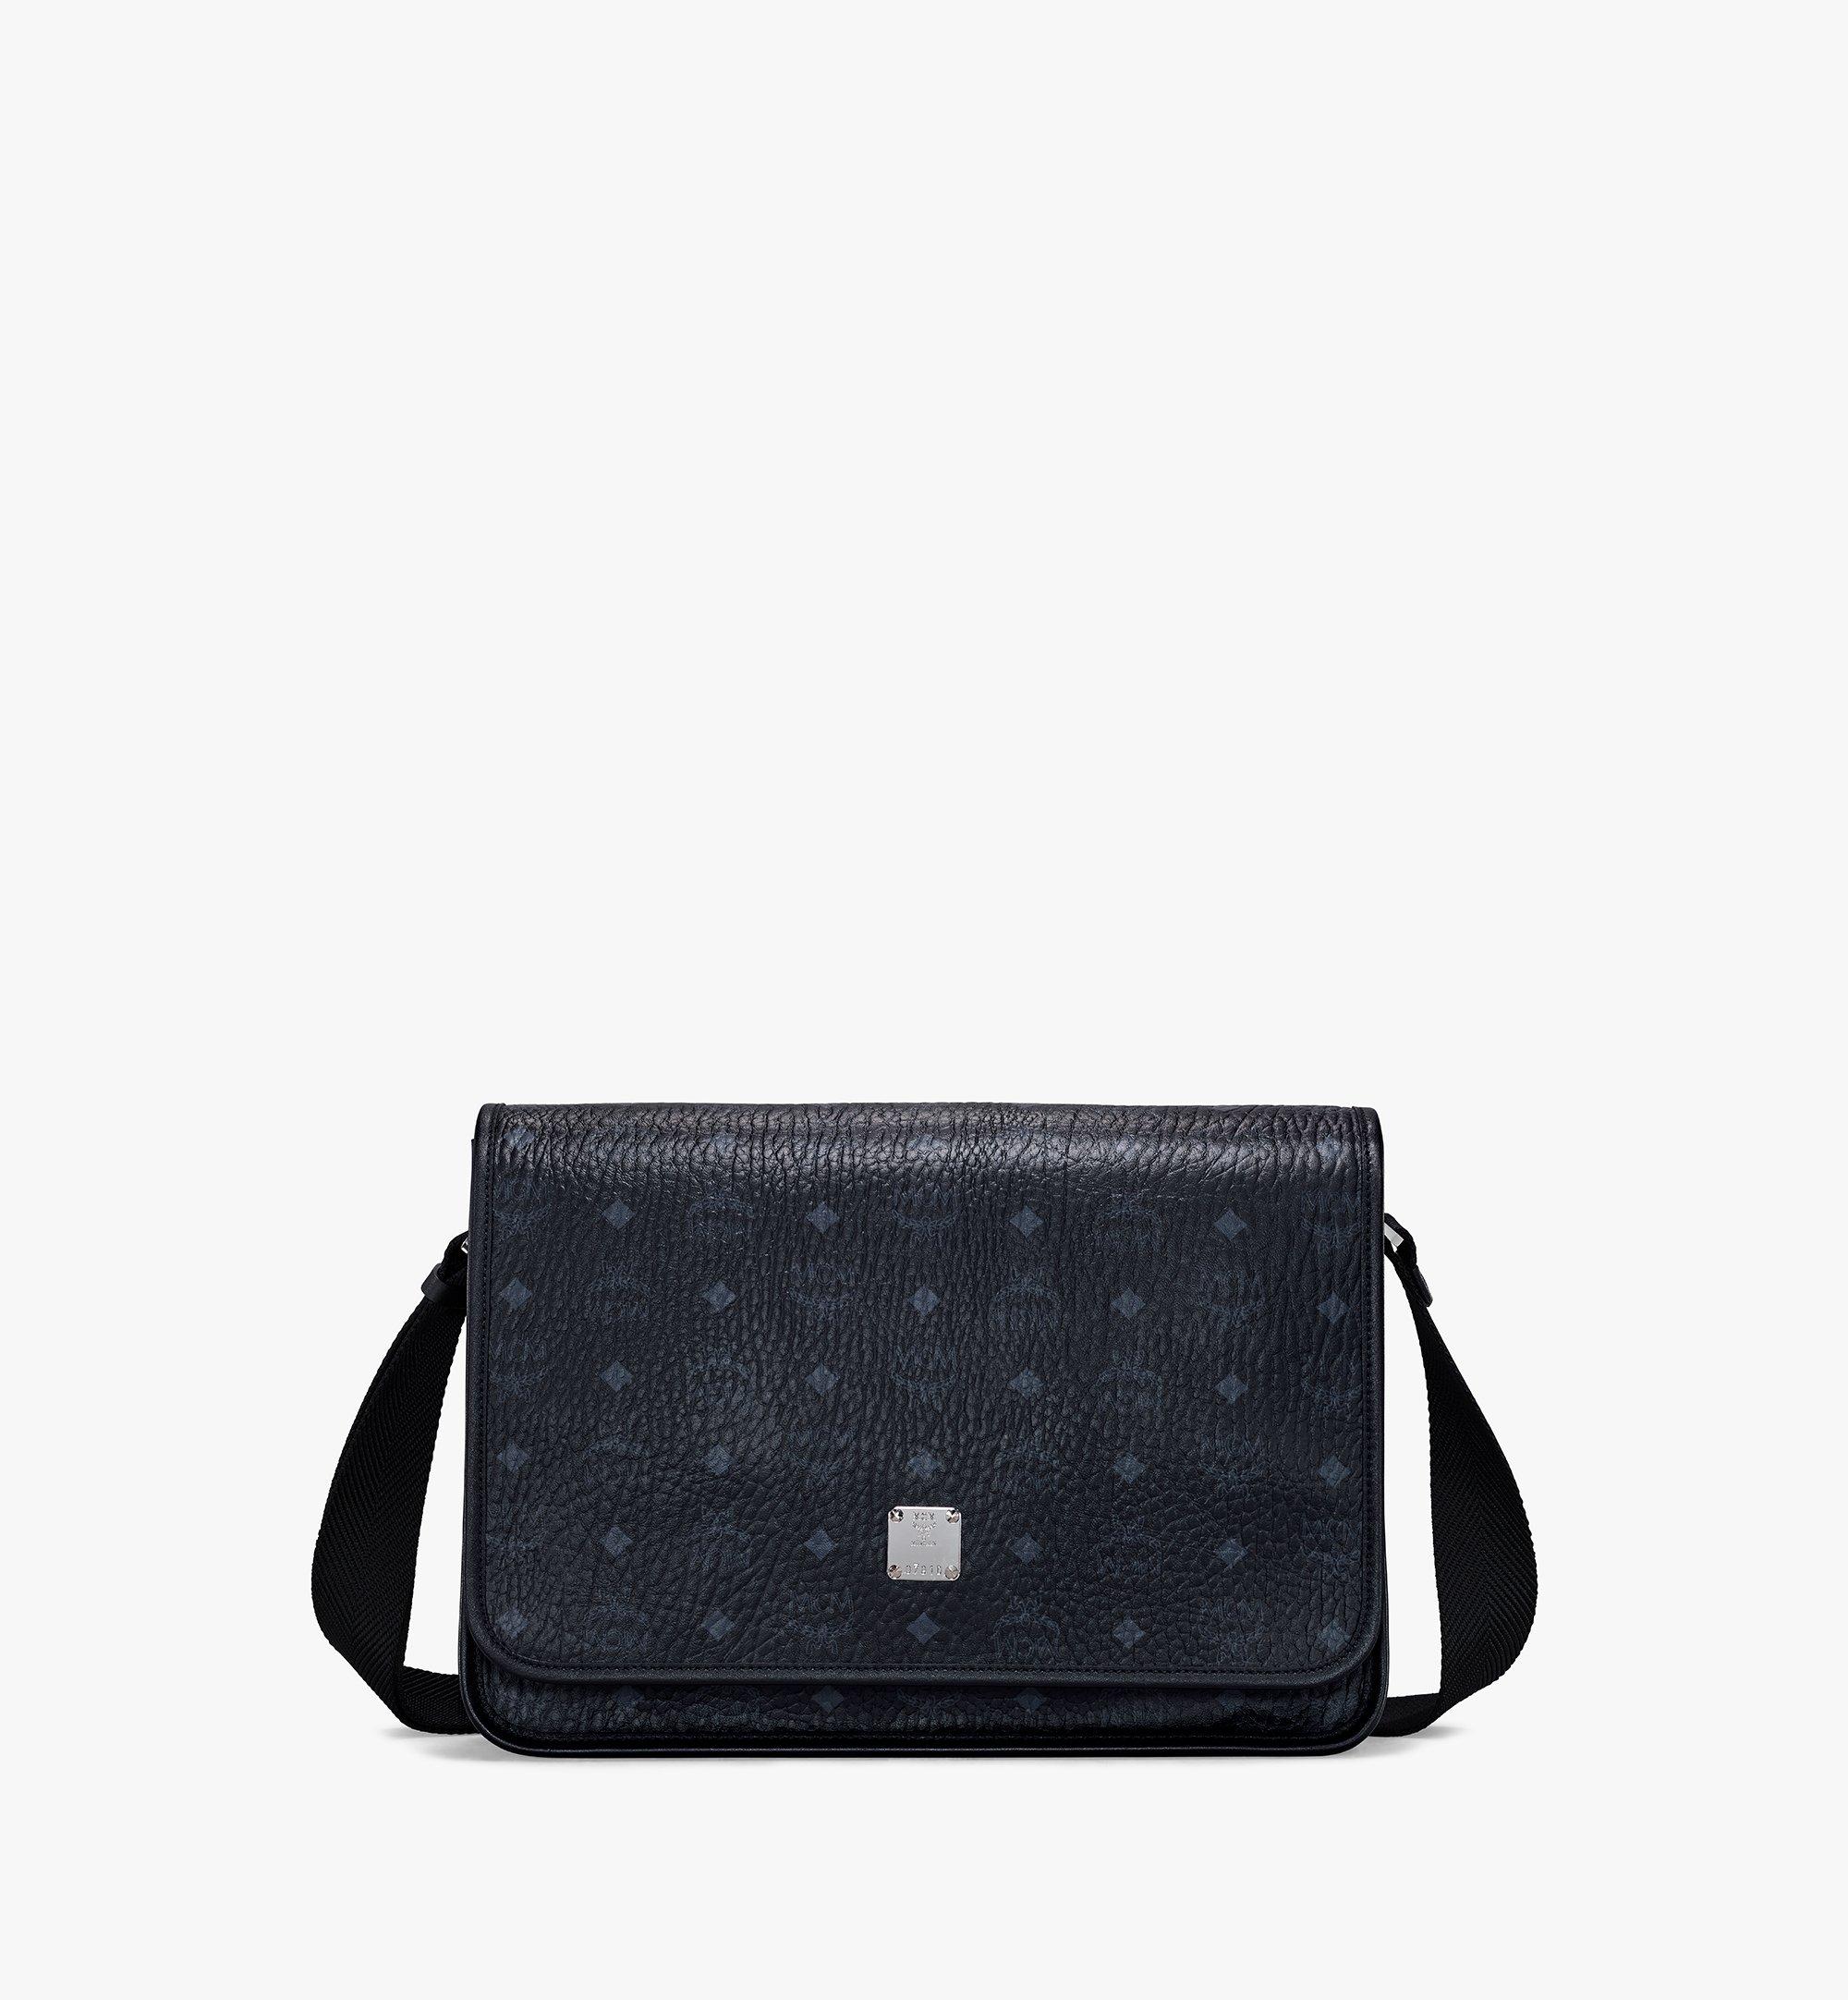 Medium Klassik Messenger Bag in Visetos Black | MCM® UK